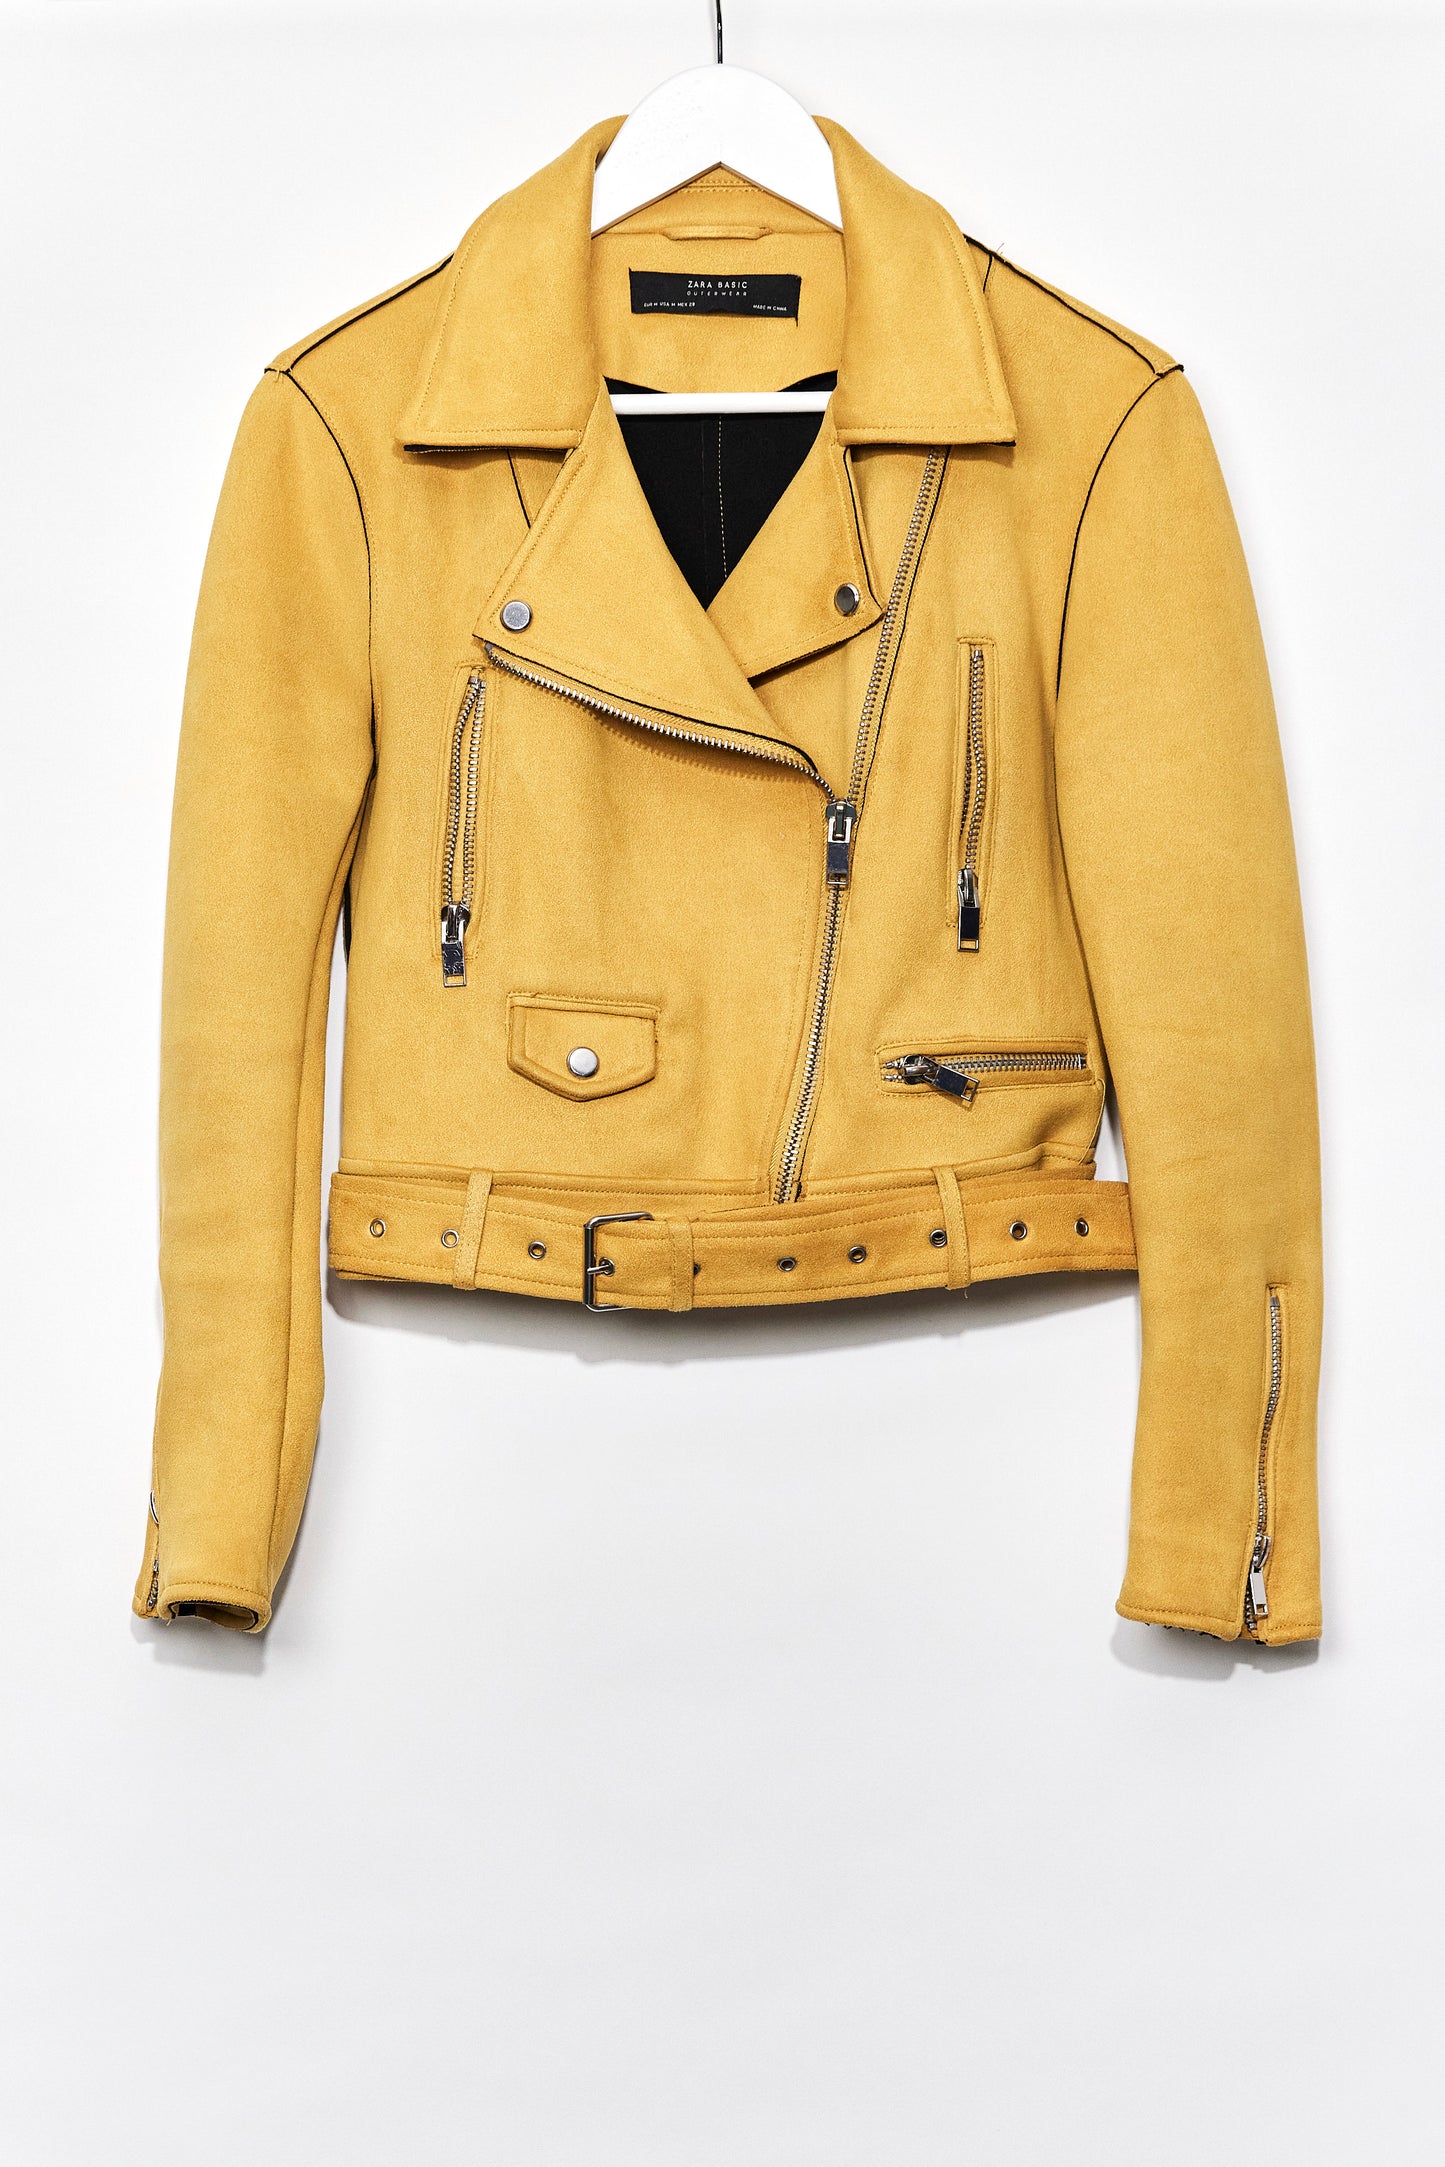 Womens Zara Yellow Biker Jacket size medium